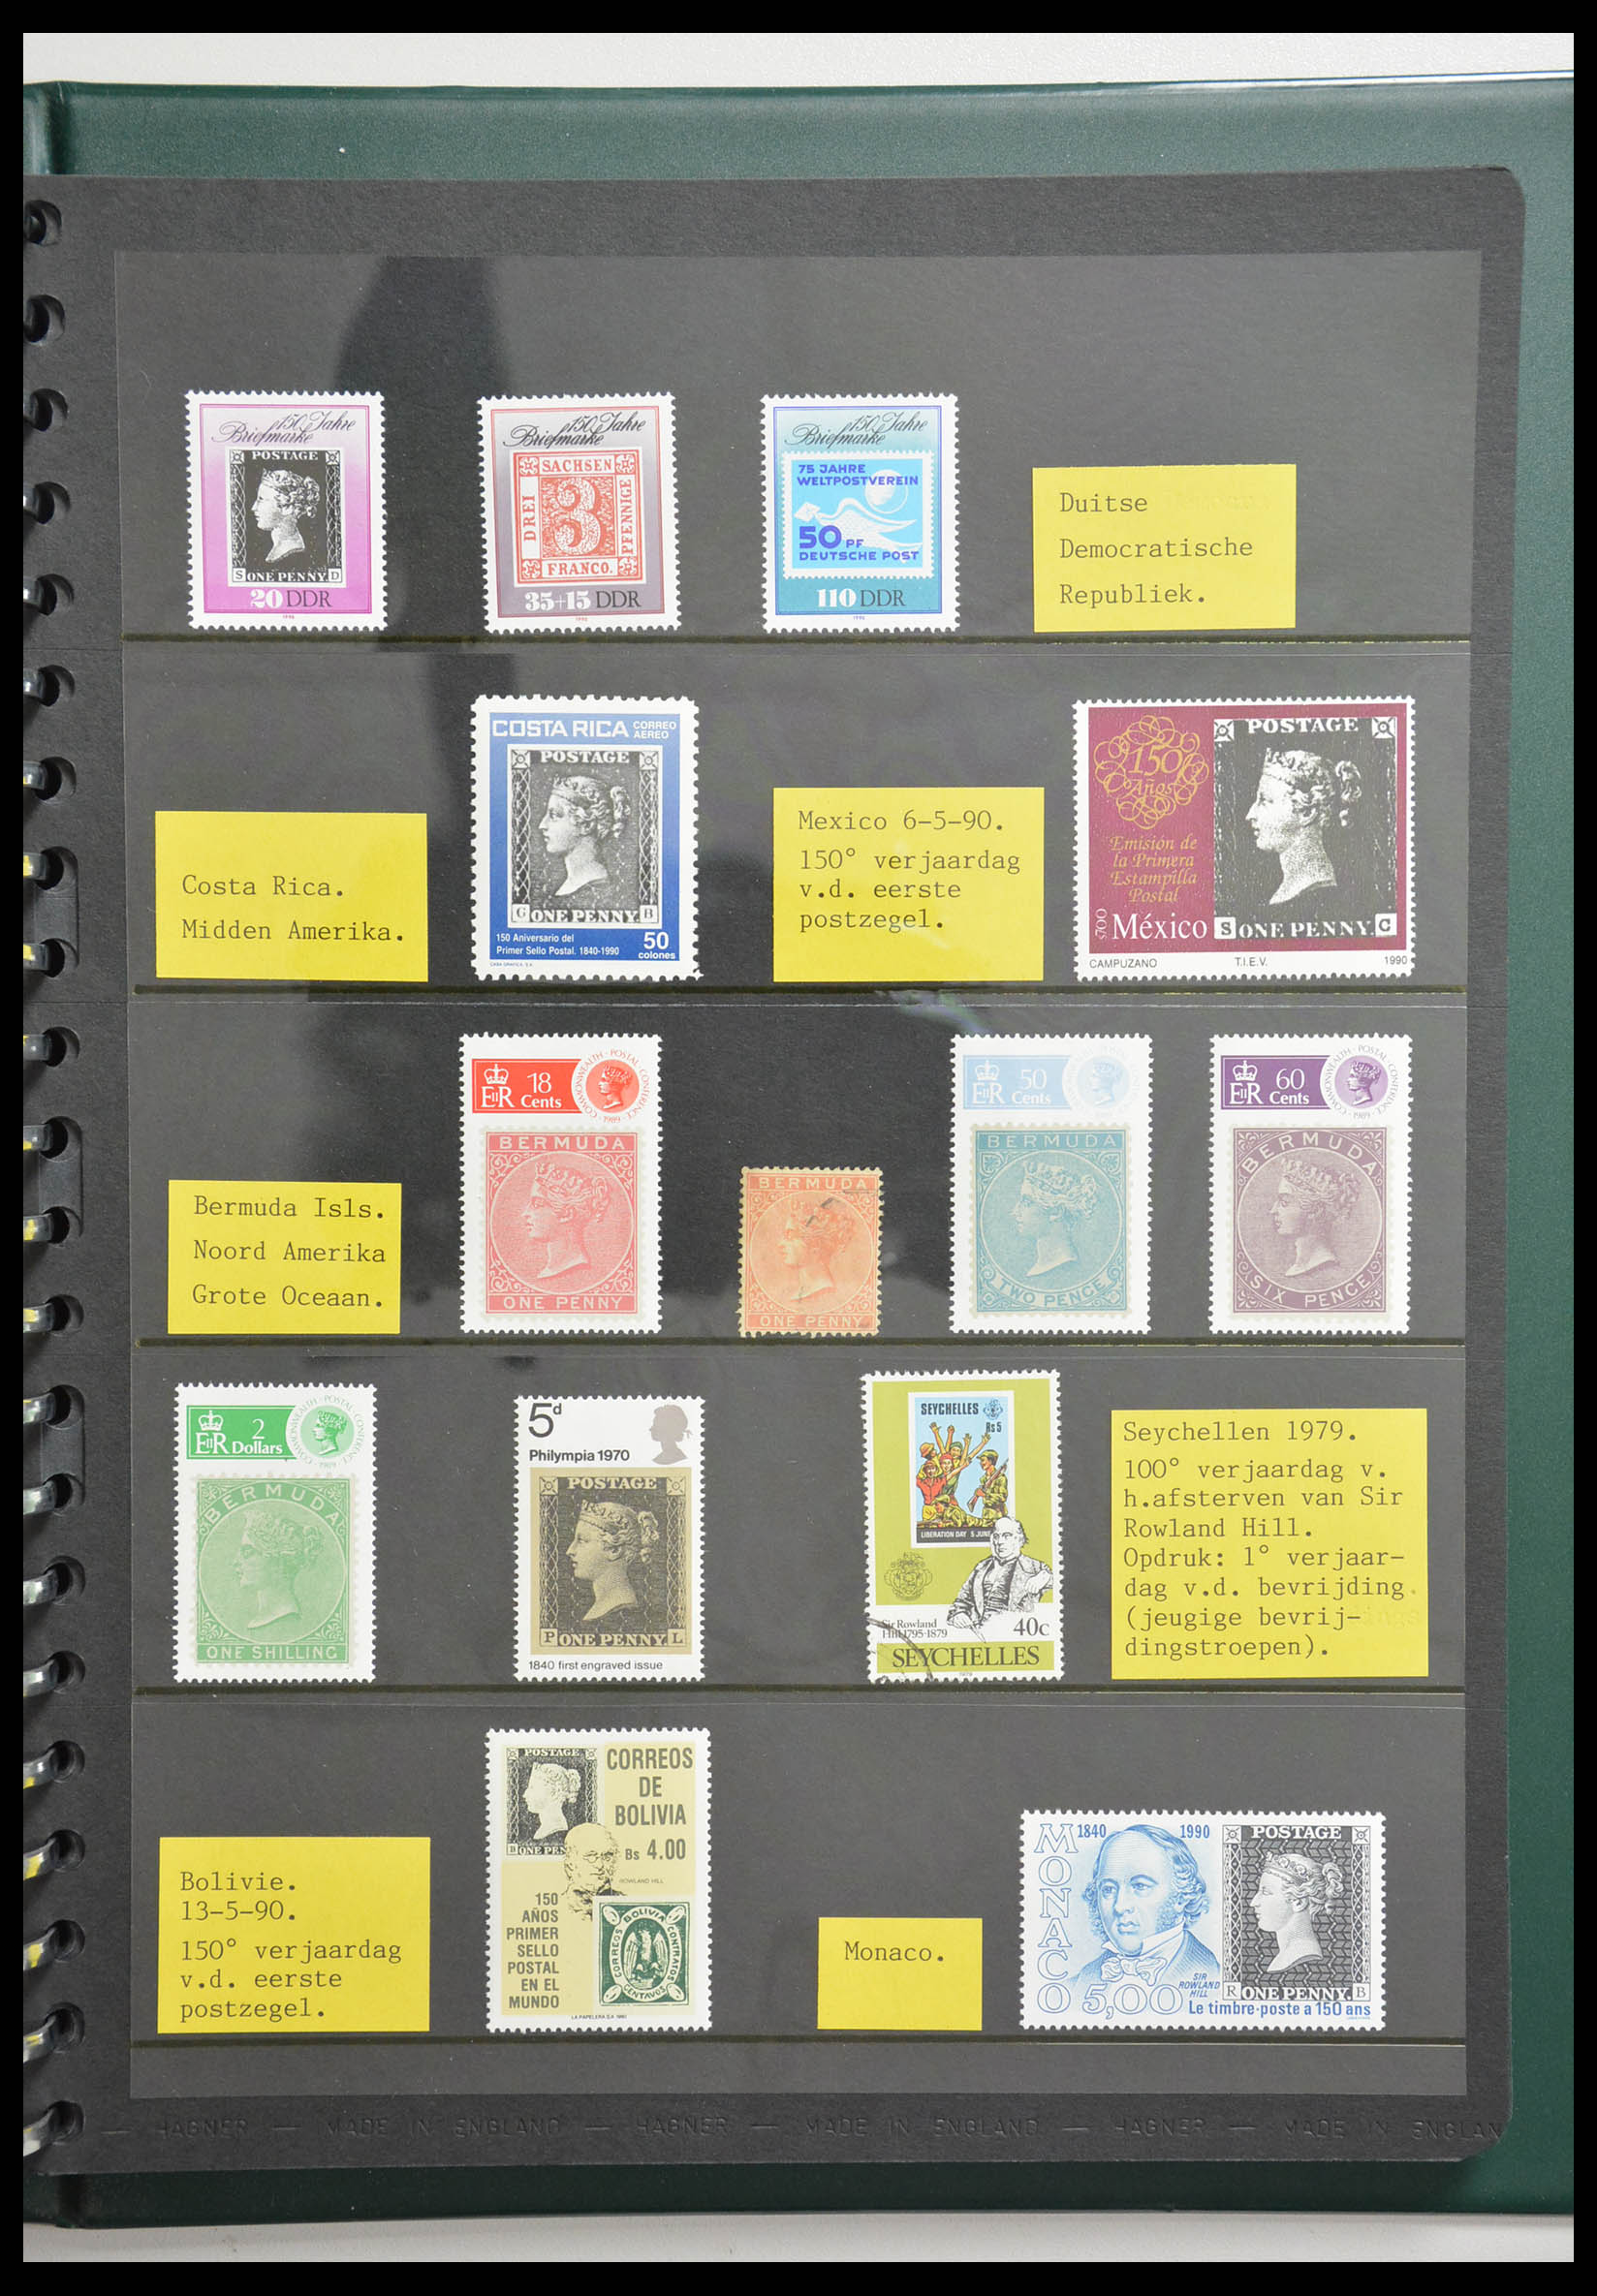 28337 039 - 28337 Postzegel op postzegel 1840-2001.